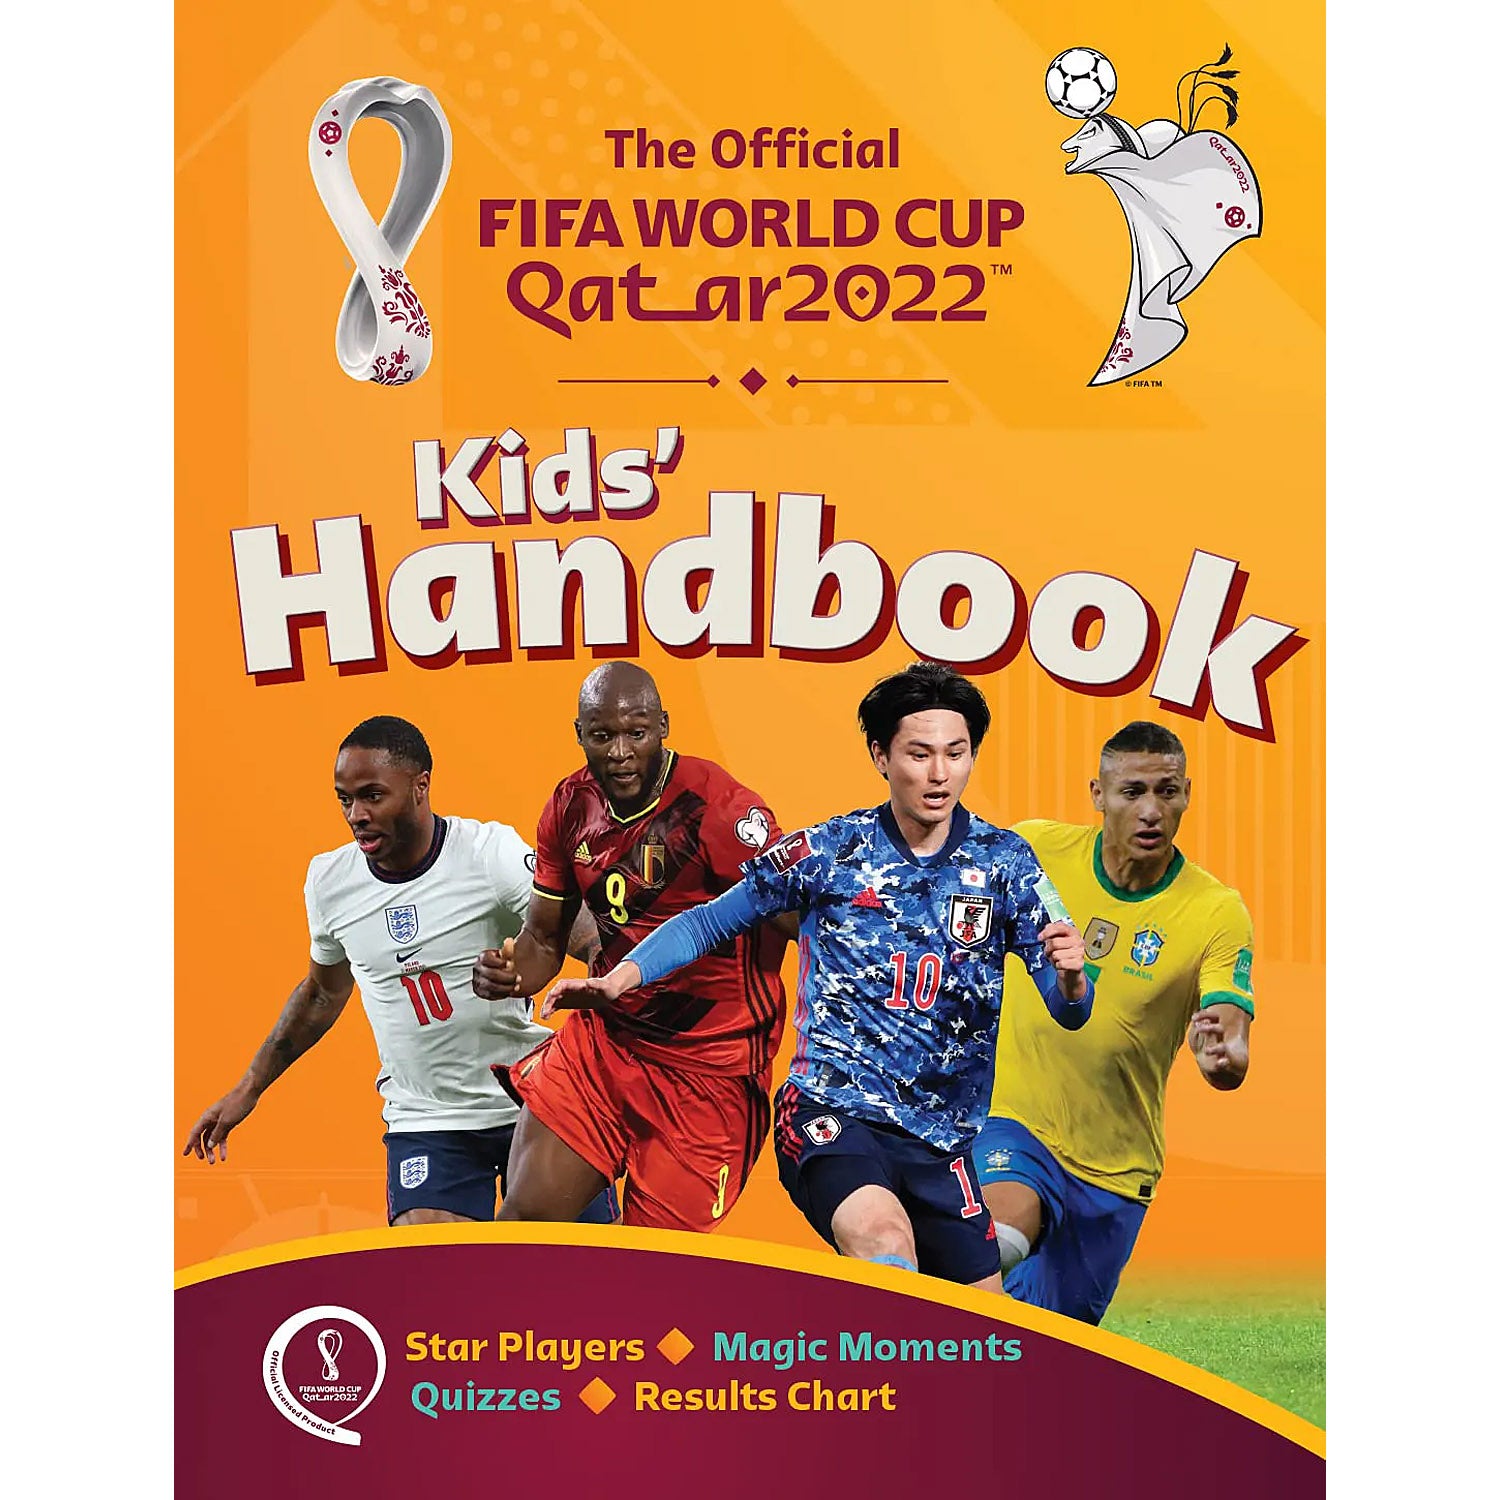 The Official FIFA World Cup 2022 Qatar Kids' Handbook